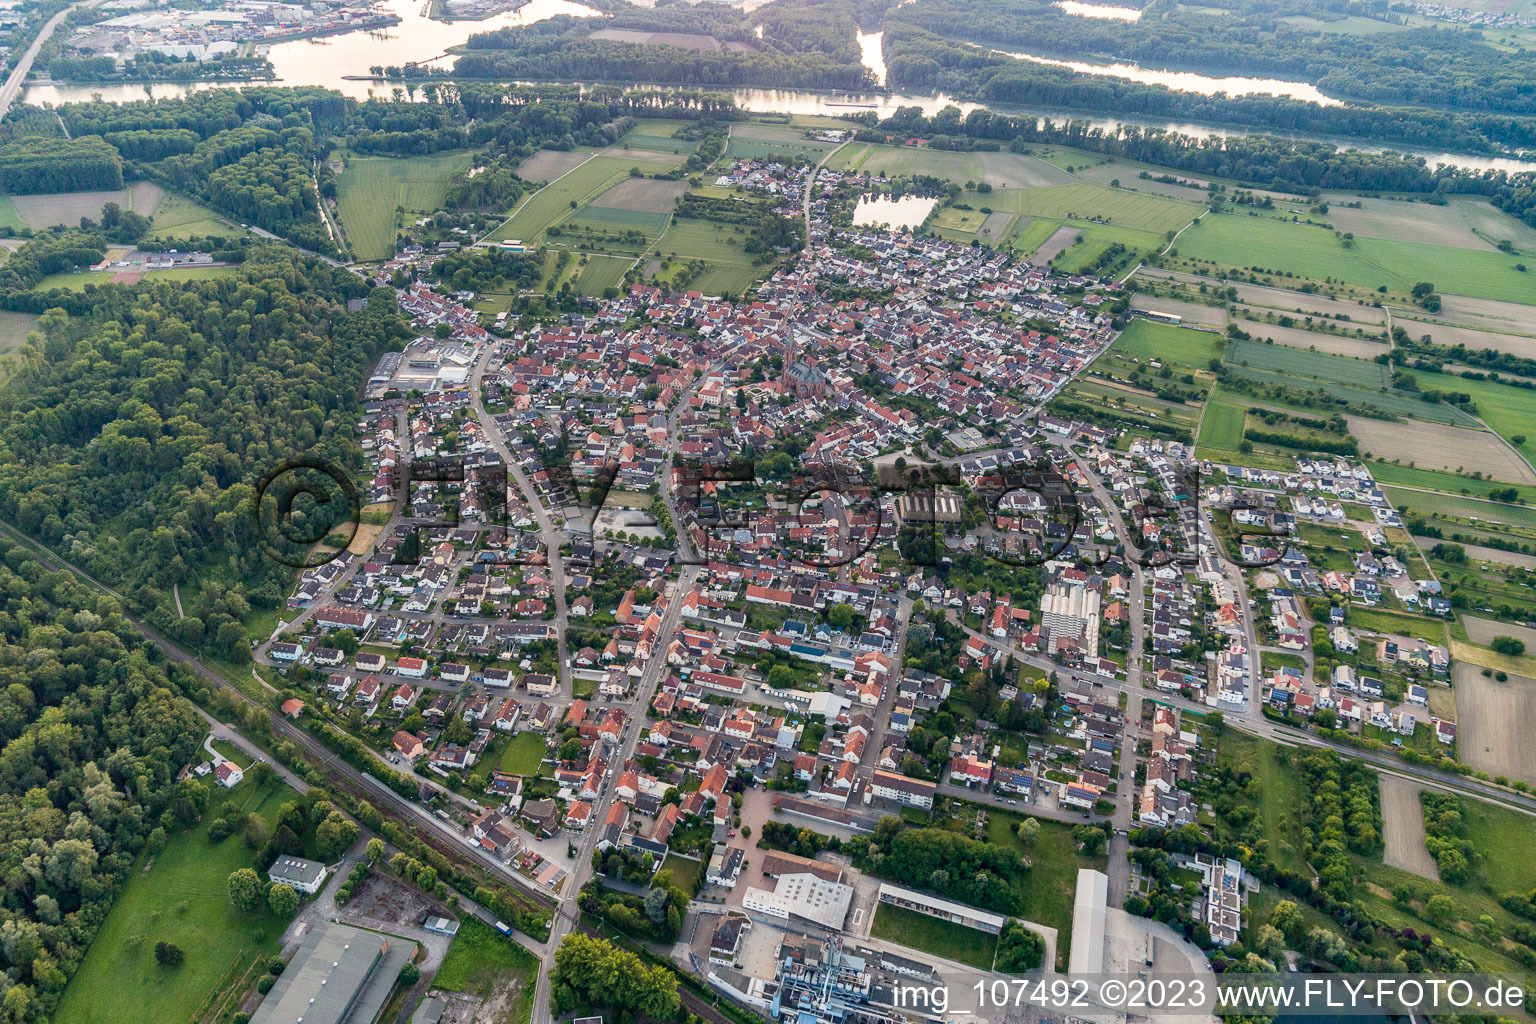 District Rheinsheim in Philippsburg in the state Baden-Wuerttemberg, Germany from the plane